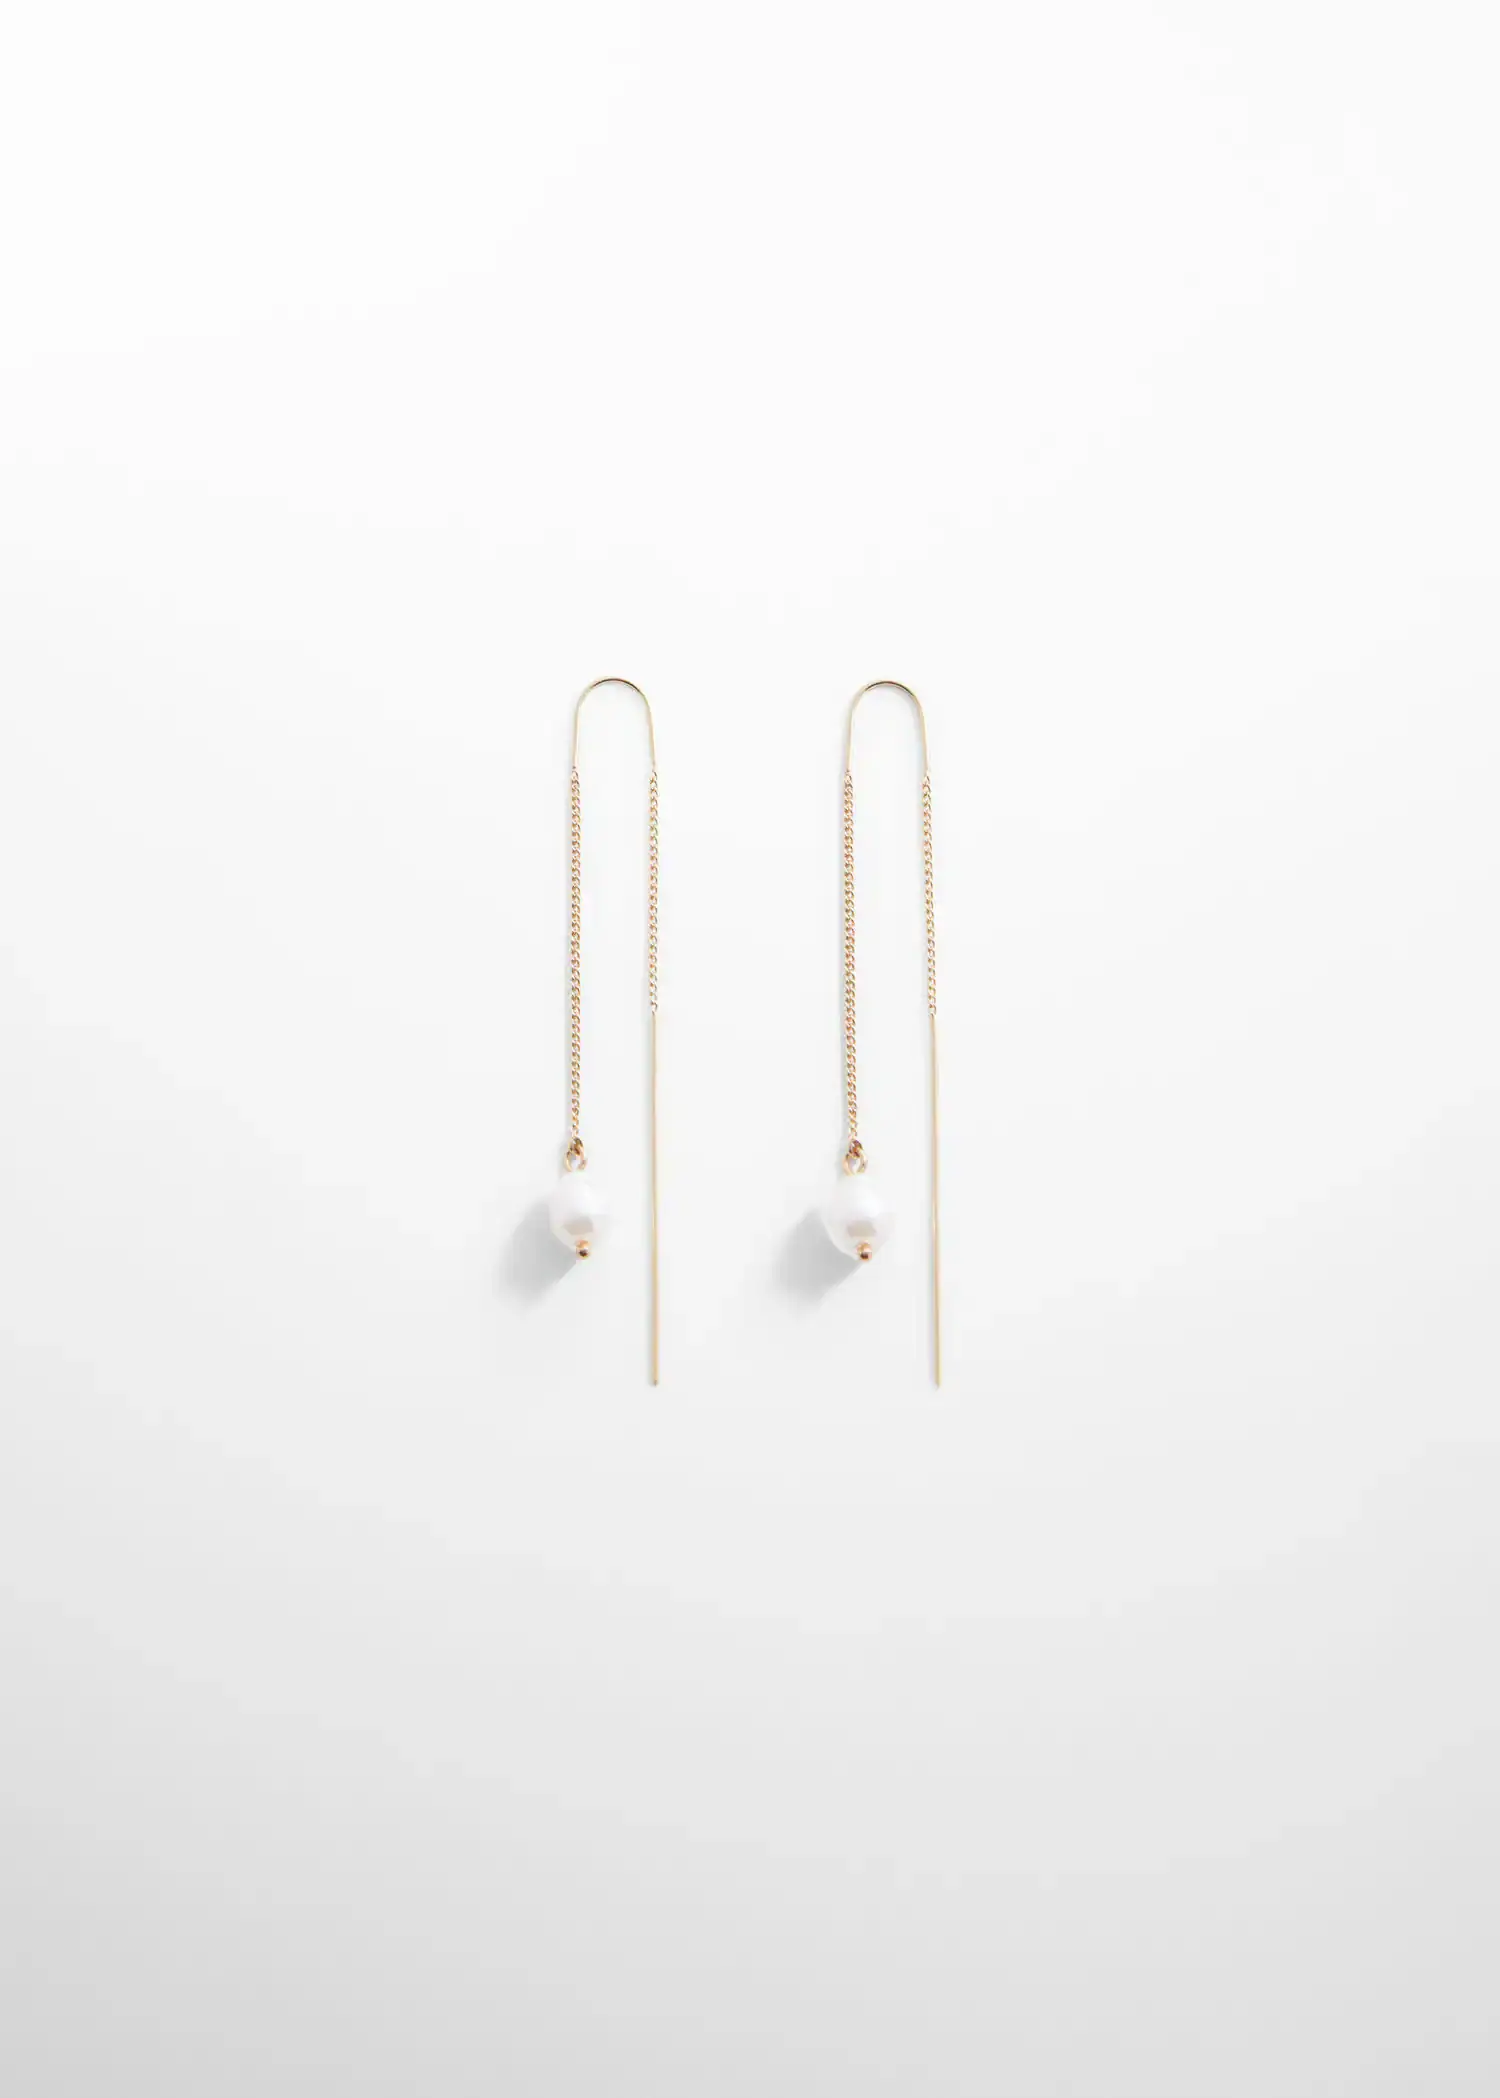 Mango Pearl thread earrings. a pair of gold and pearl threader earrings. 